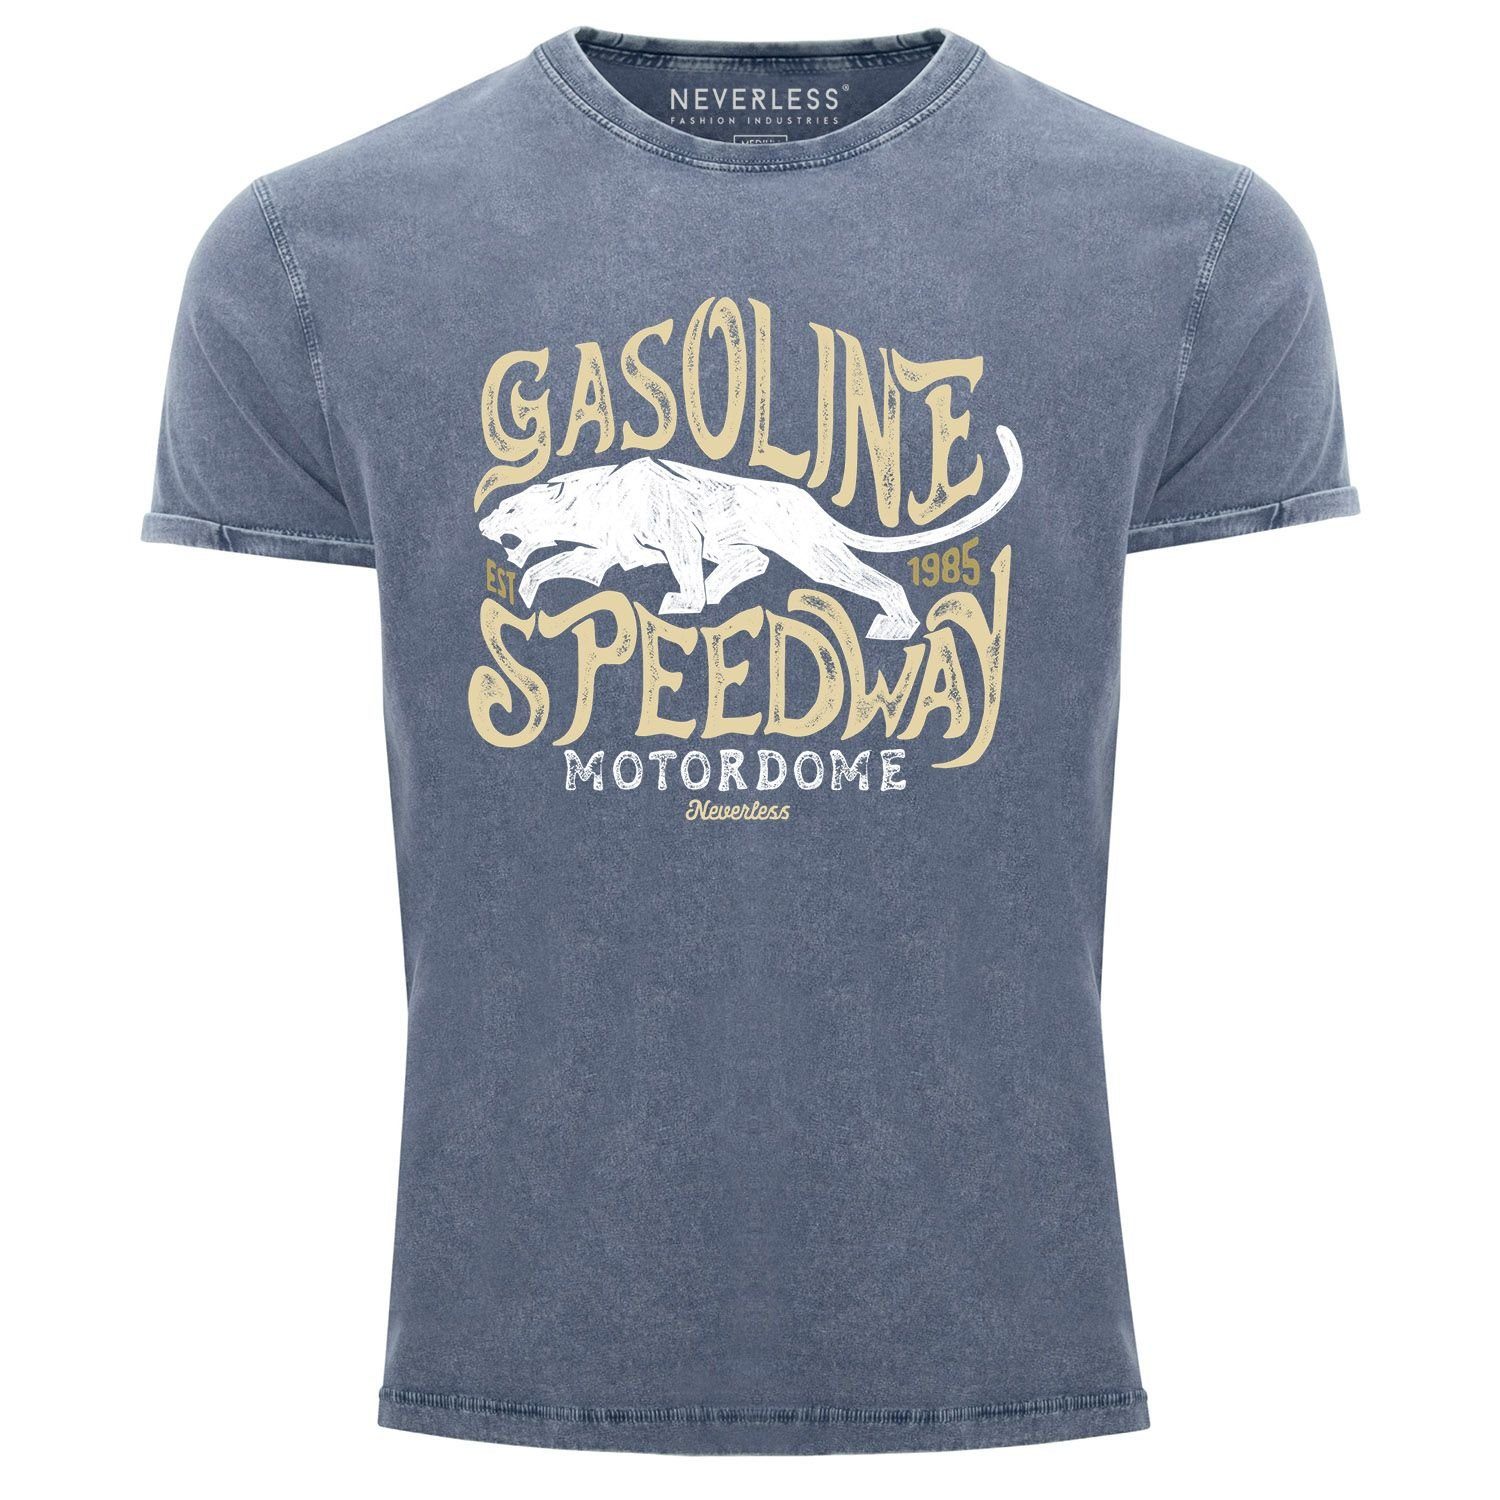 Neverless Print-Shirt Neverless® Herren T-Shirt Vintage Shirt Printshirt Gasoline Speedway Panther Motiv Used Look Slim Fit mit Print blau